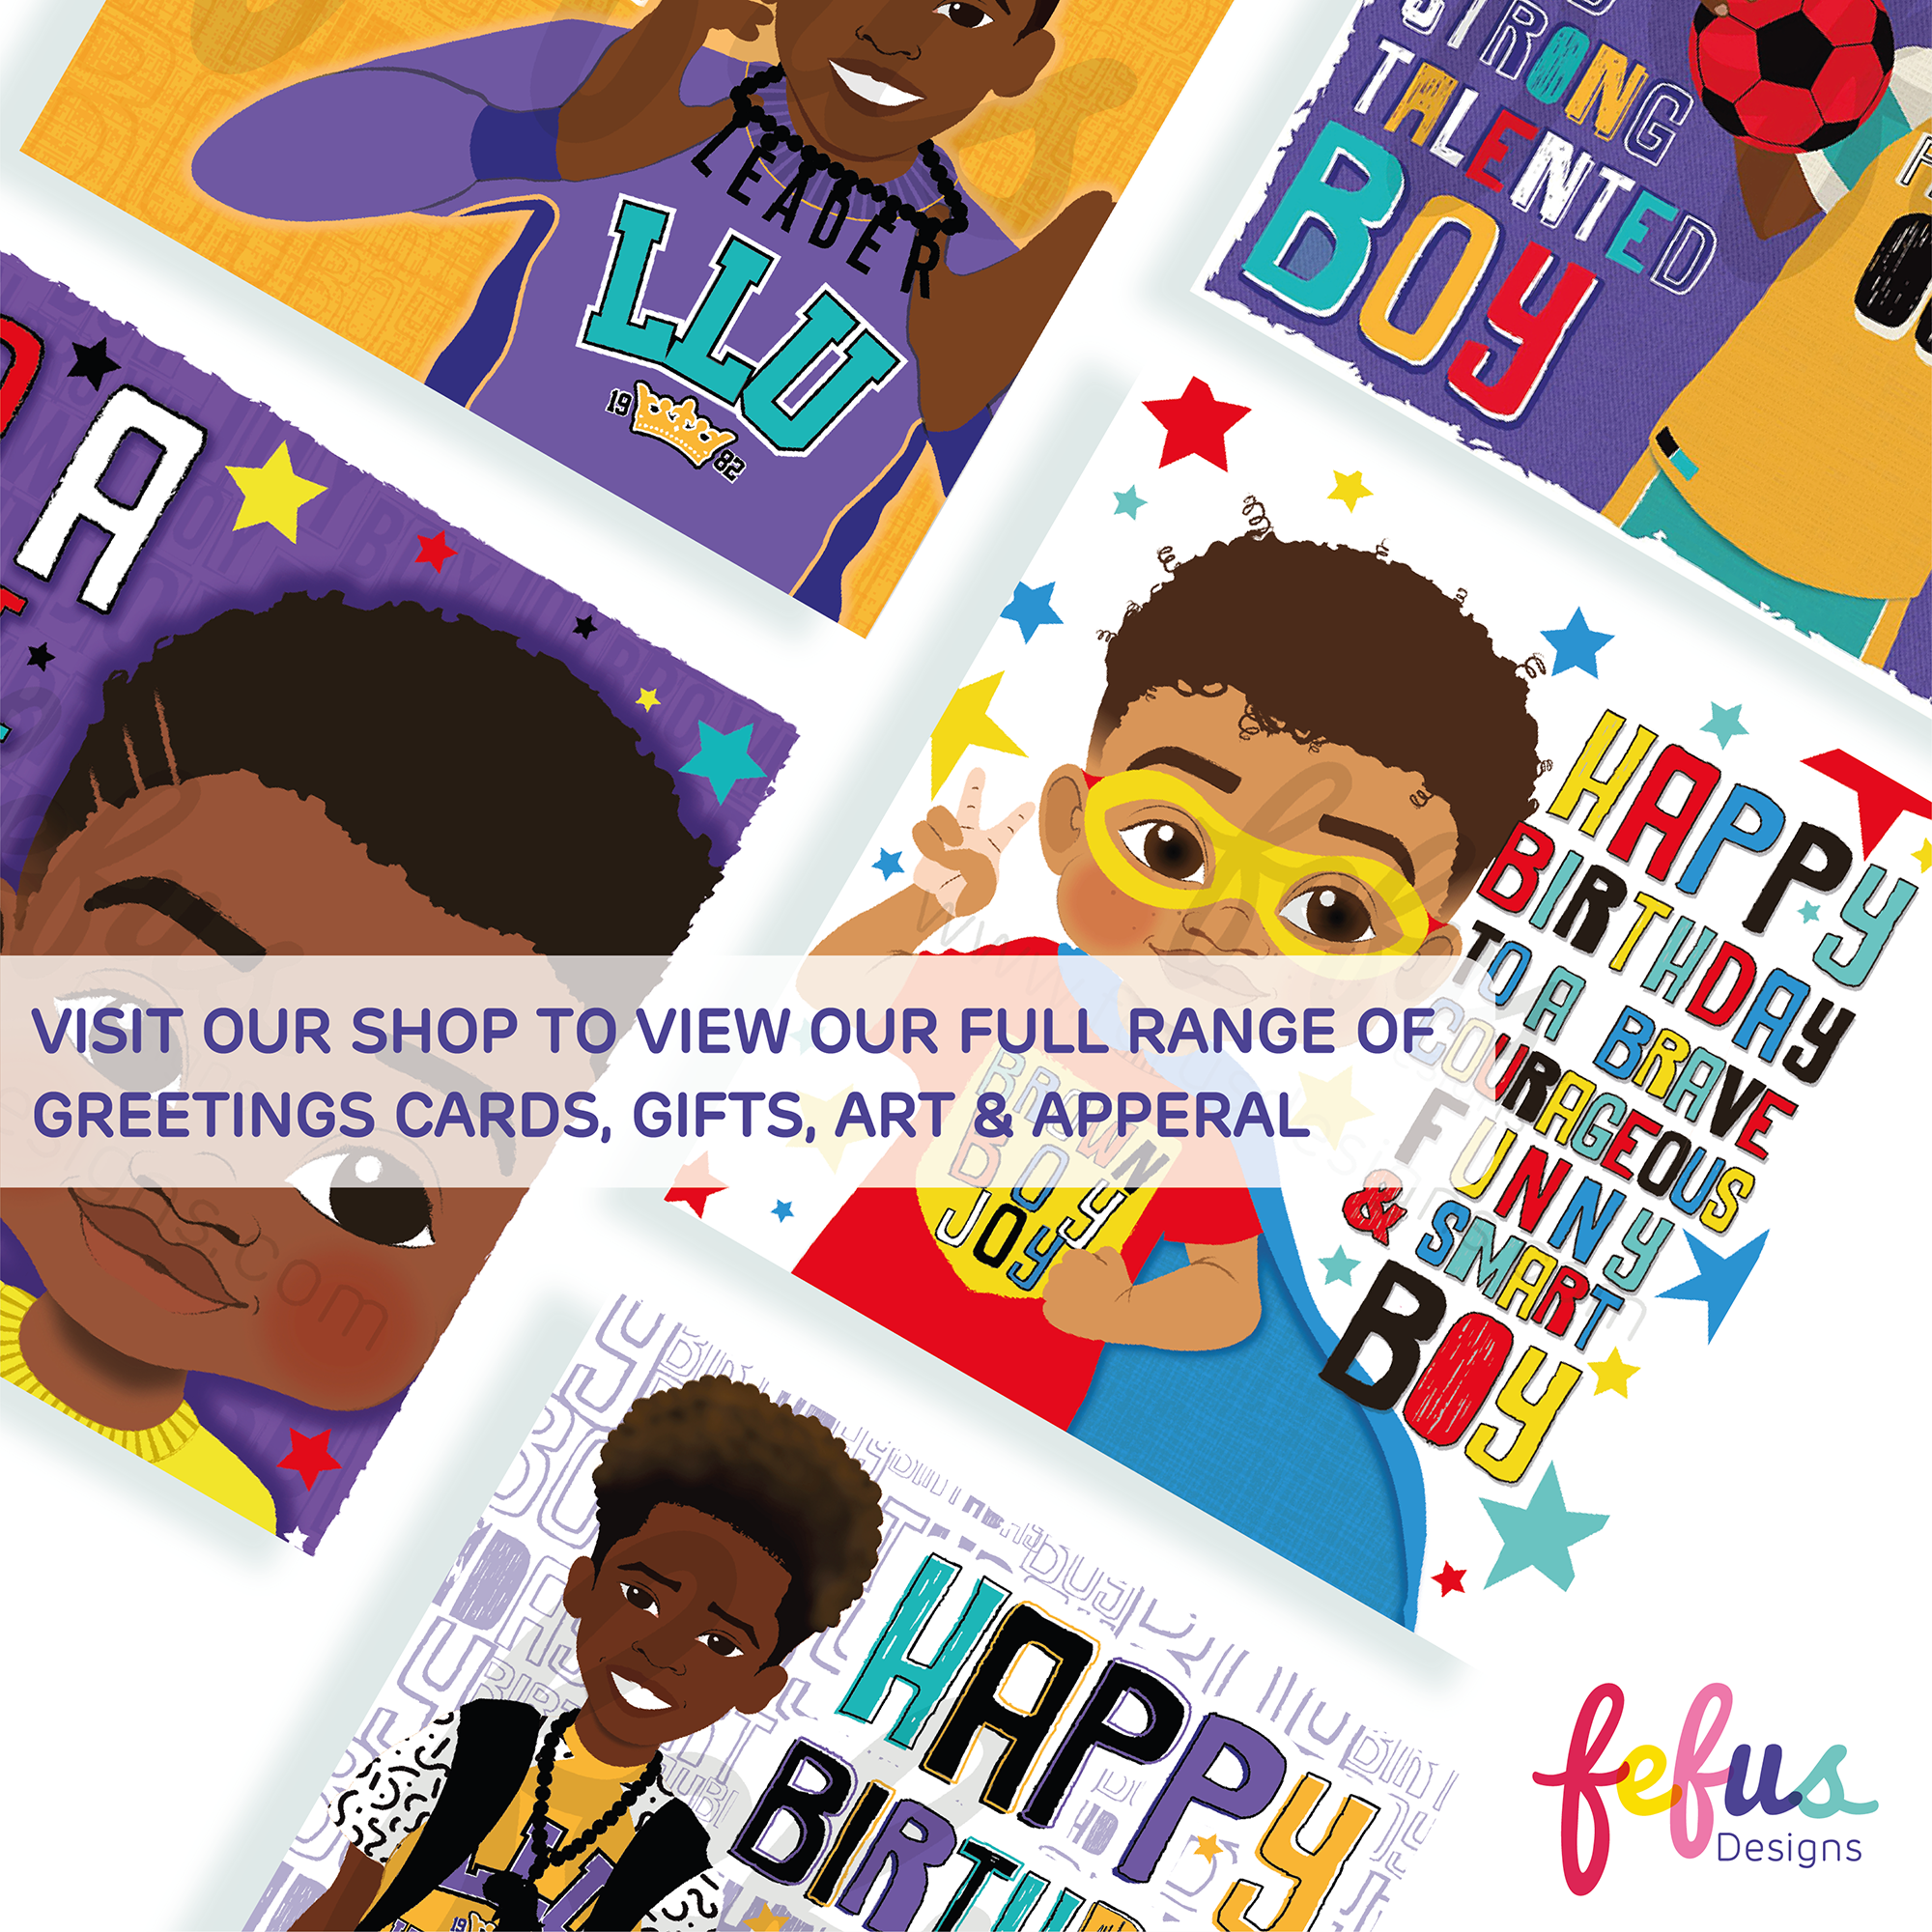 Kyrese - FOOTBALL - Black childrens Greetings Card | Fefus designs